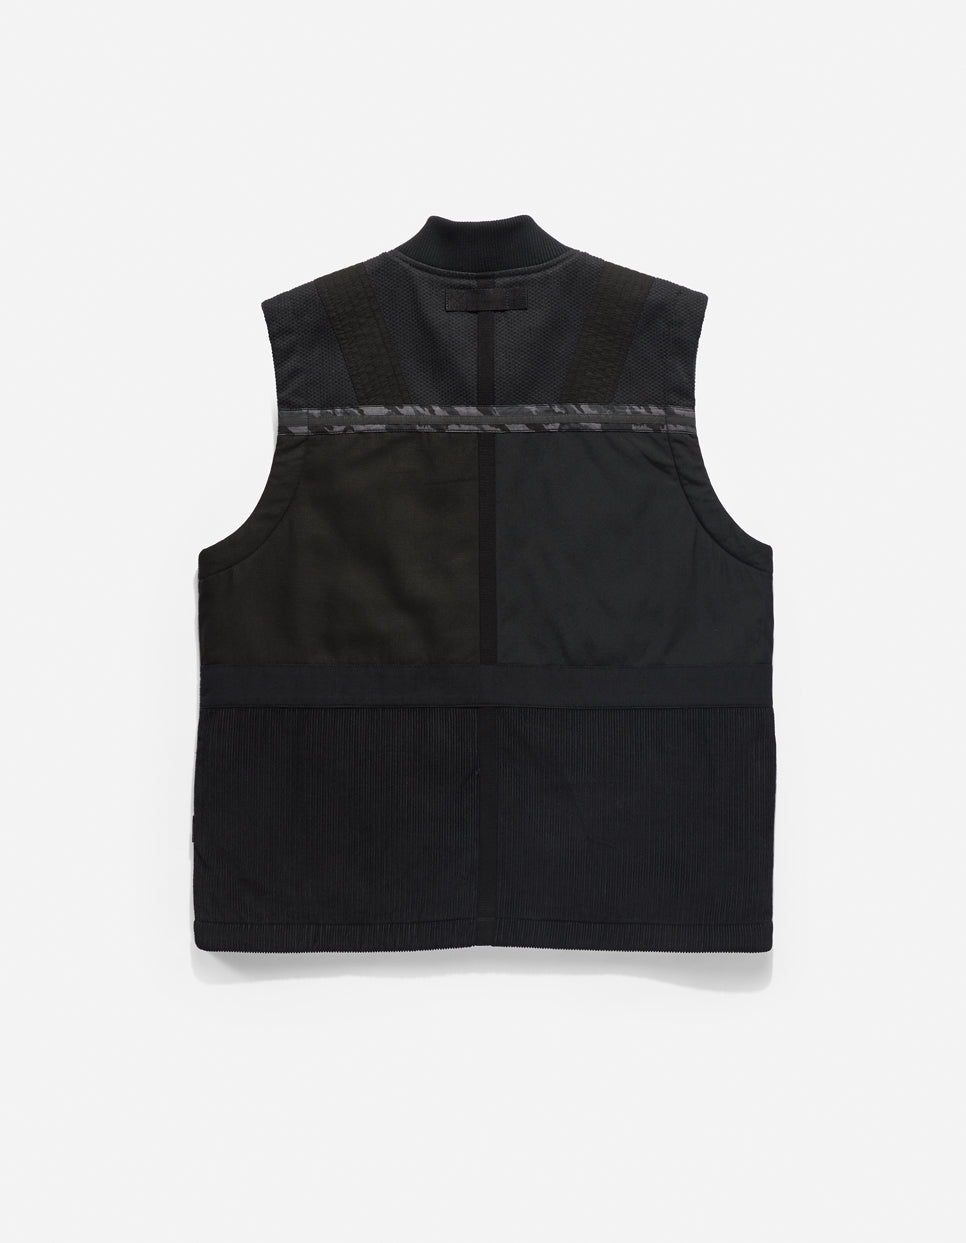 4558 Tugihagi Patchwork Tobi Vest Black